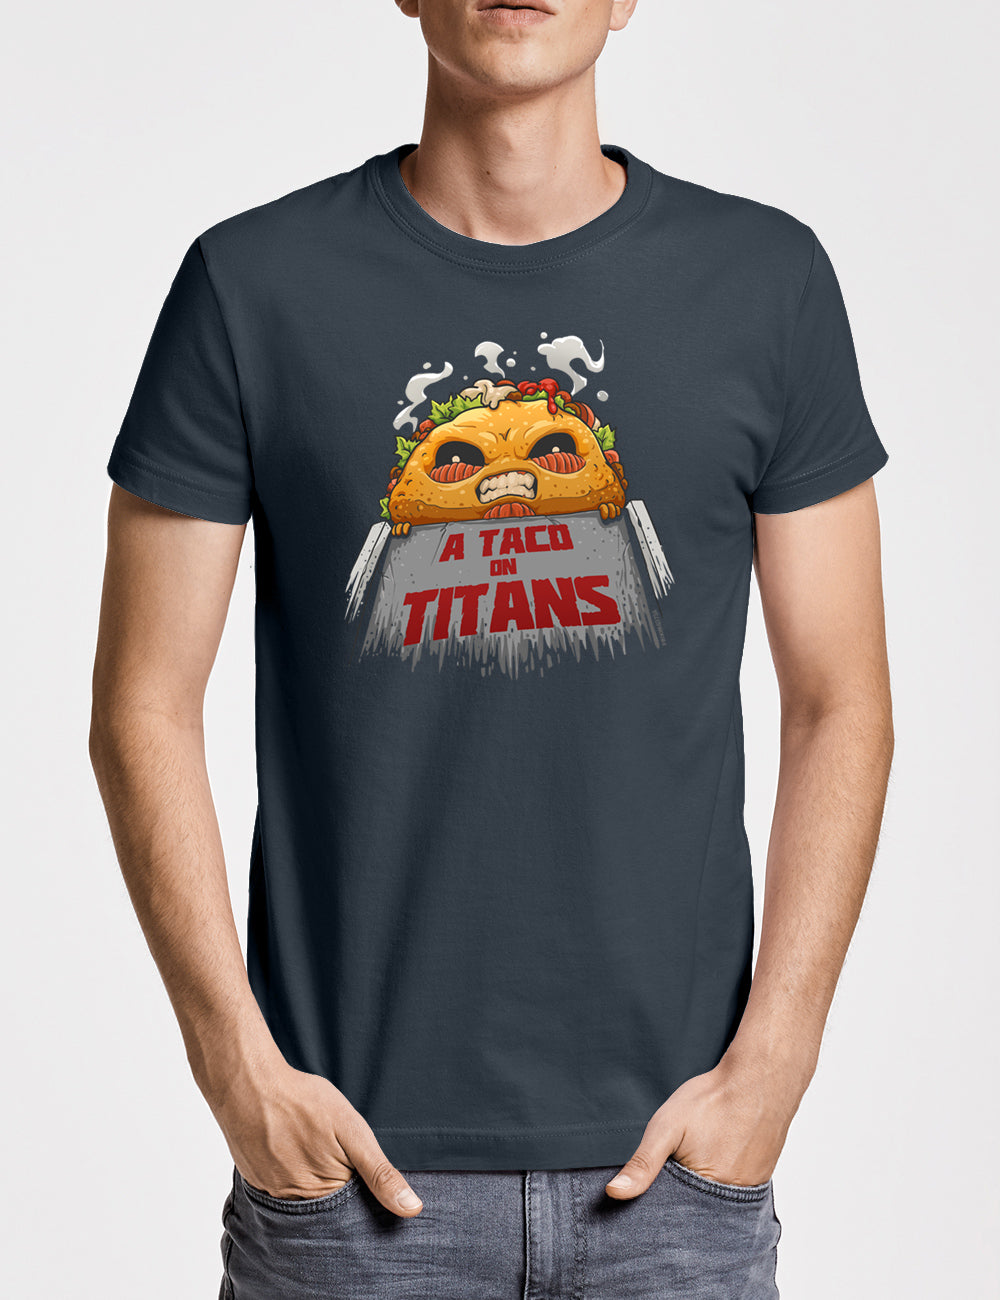 A taco on titans